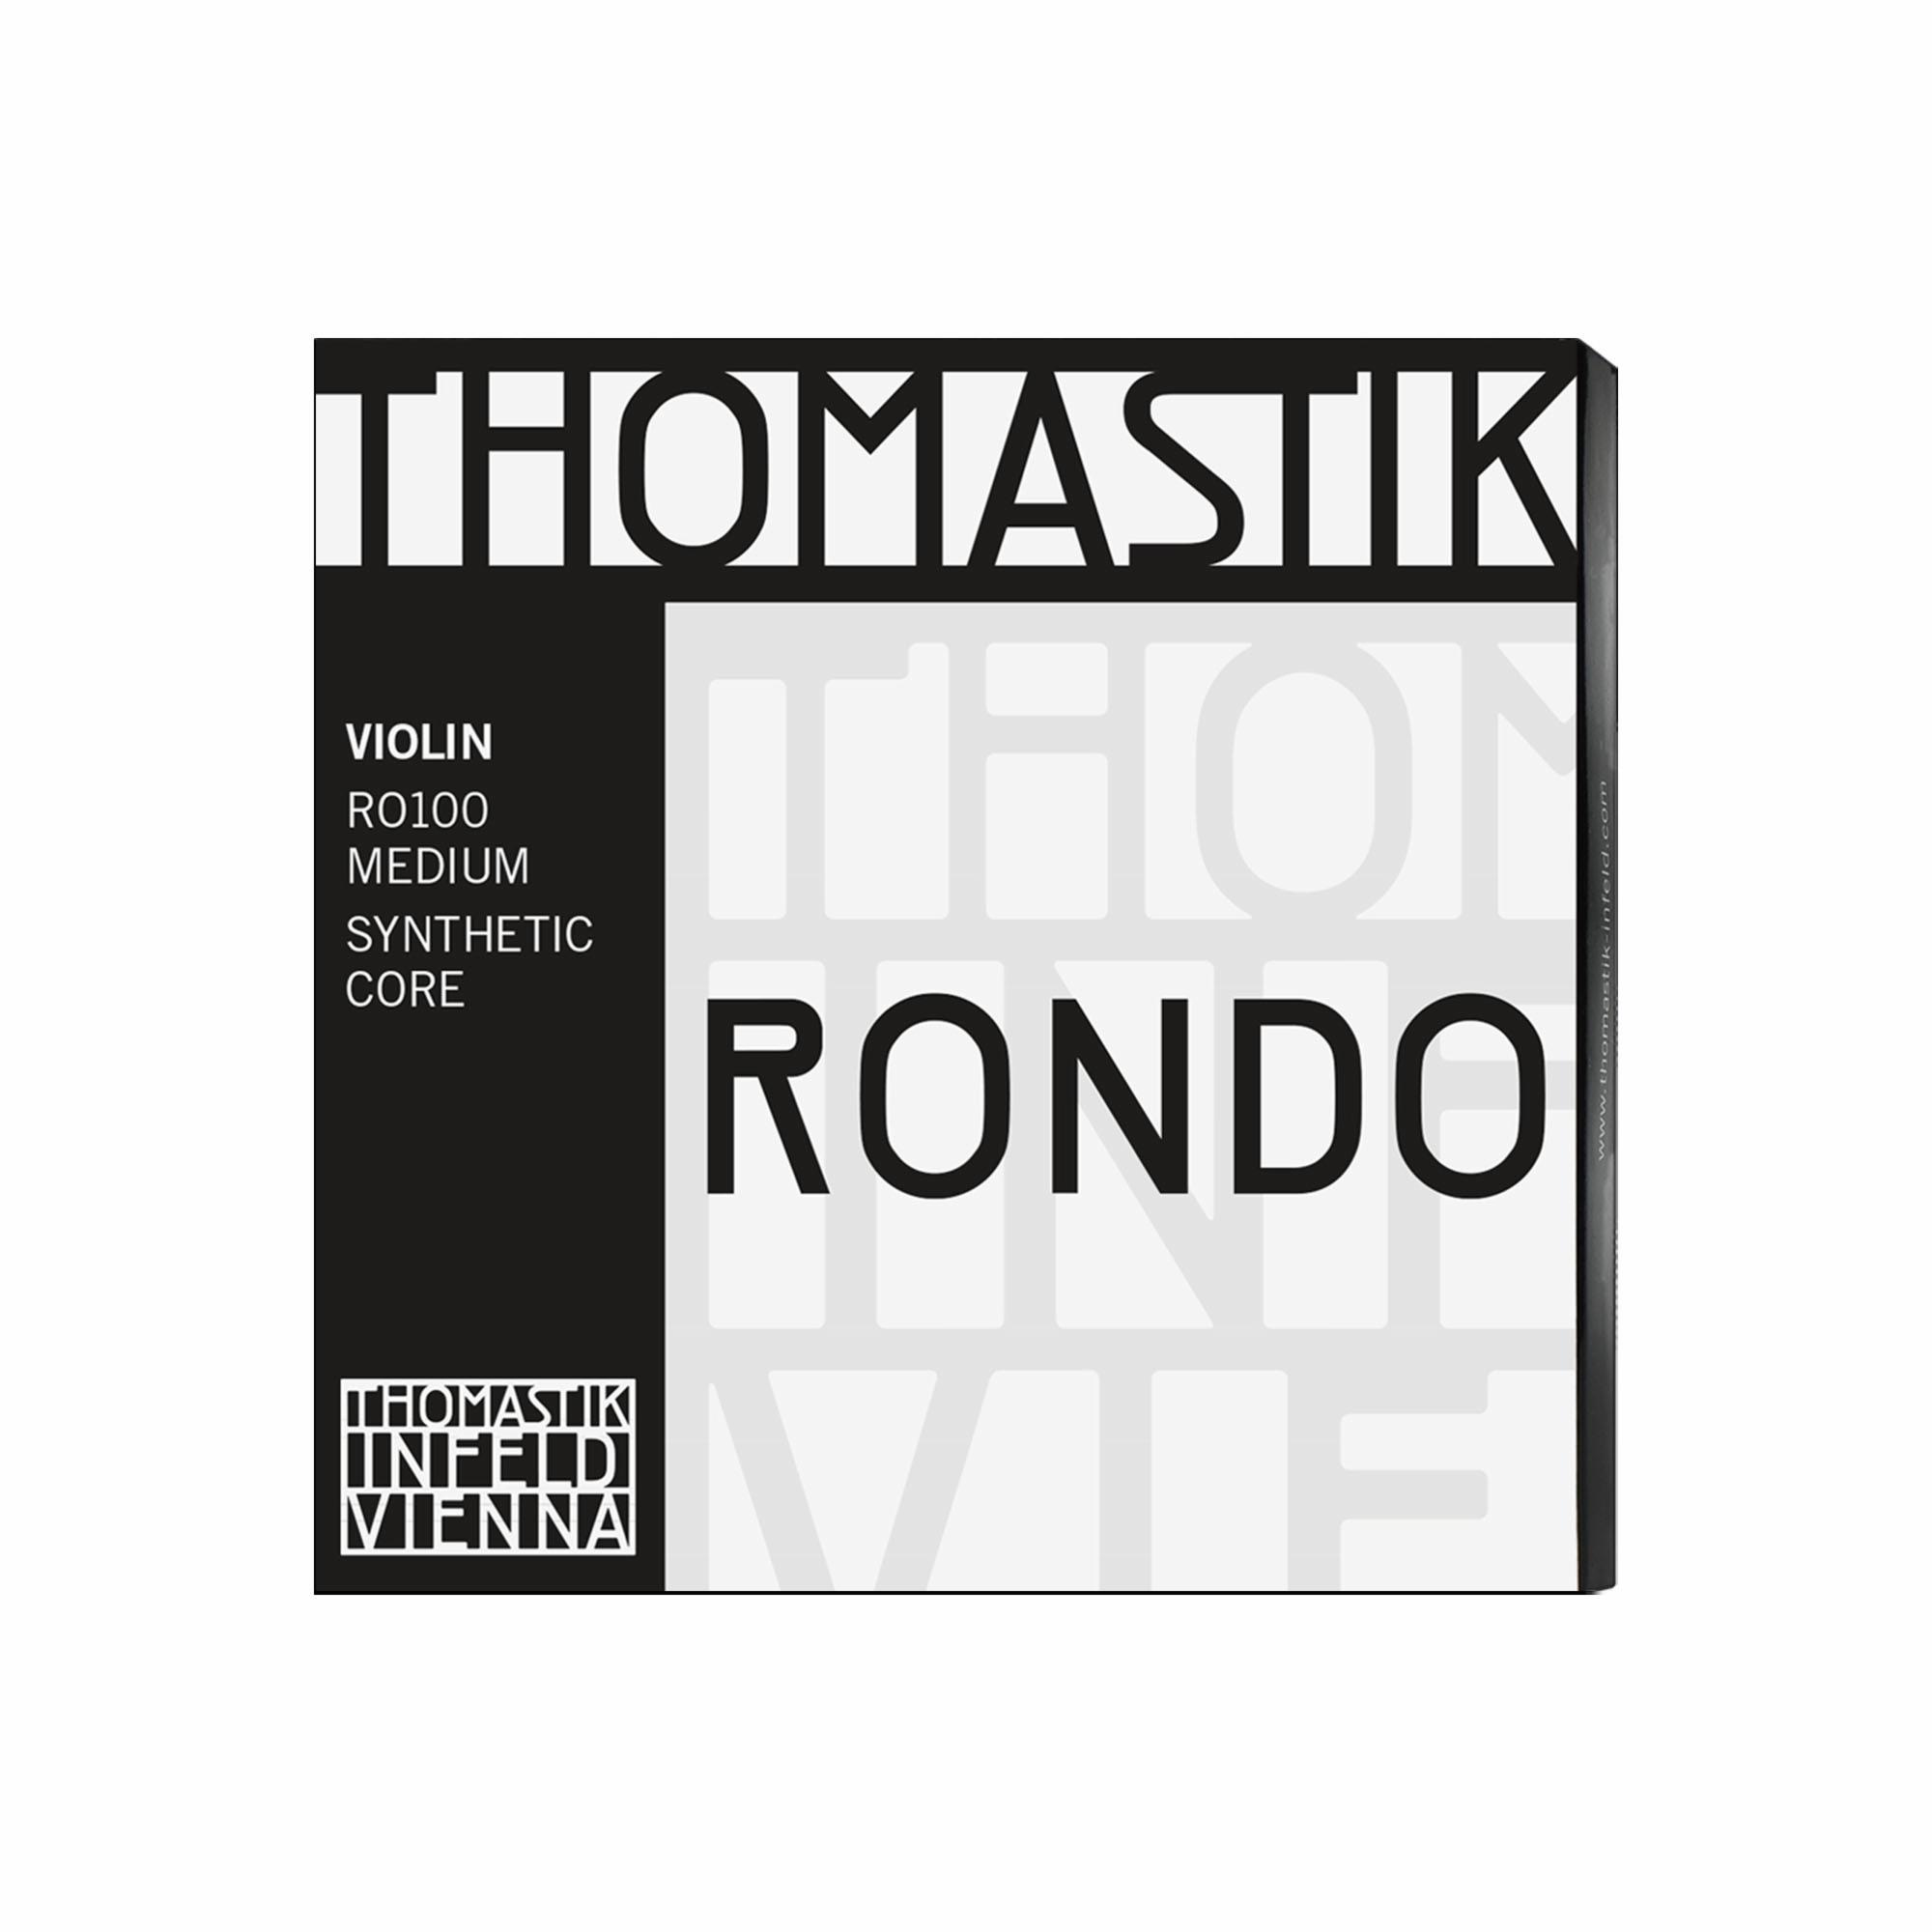 Thomastik Rondo Violin Strings | Southwest Strings